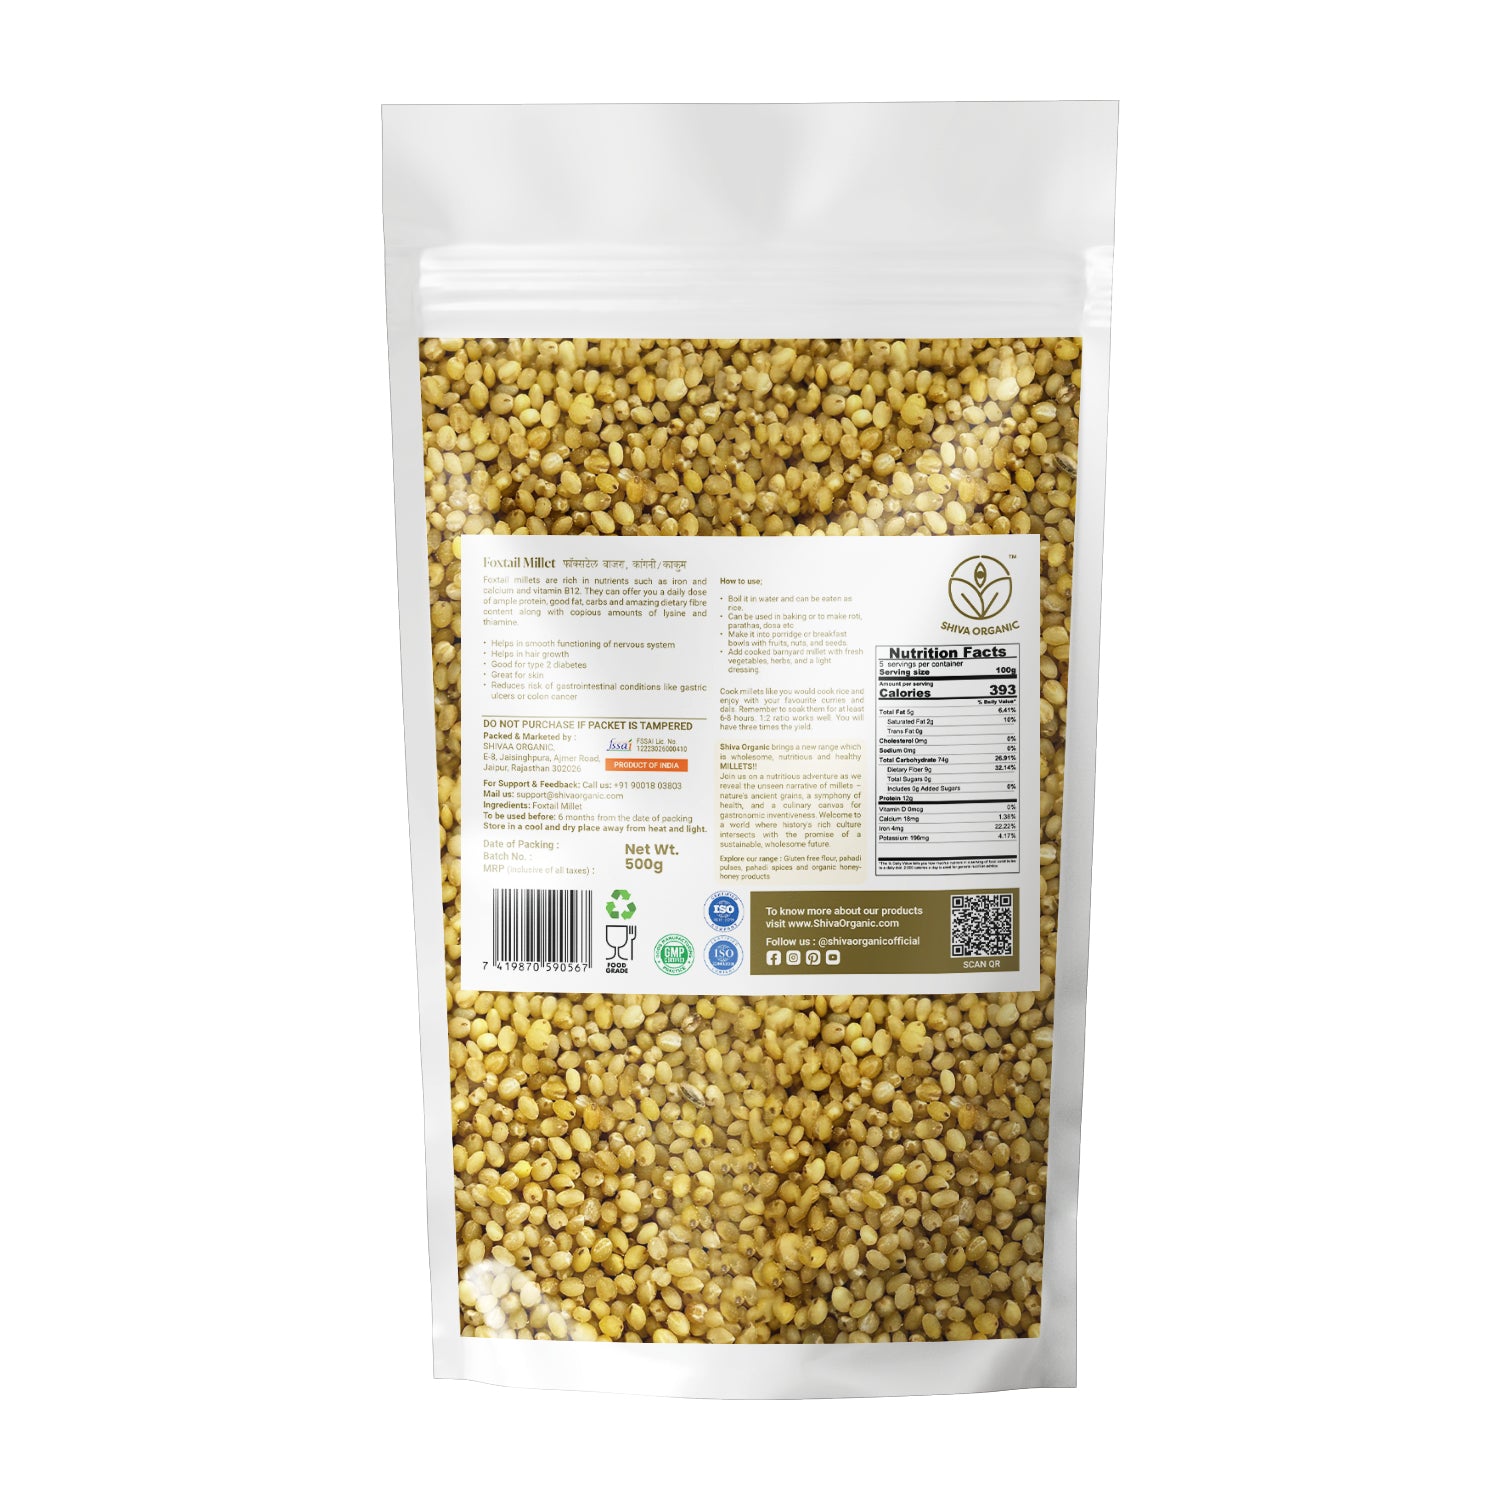 Foxtail Millet | 500g | Shiva Organic